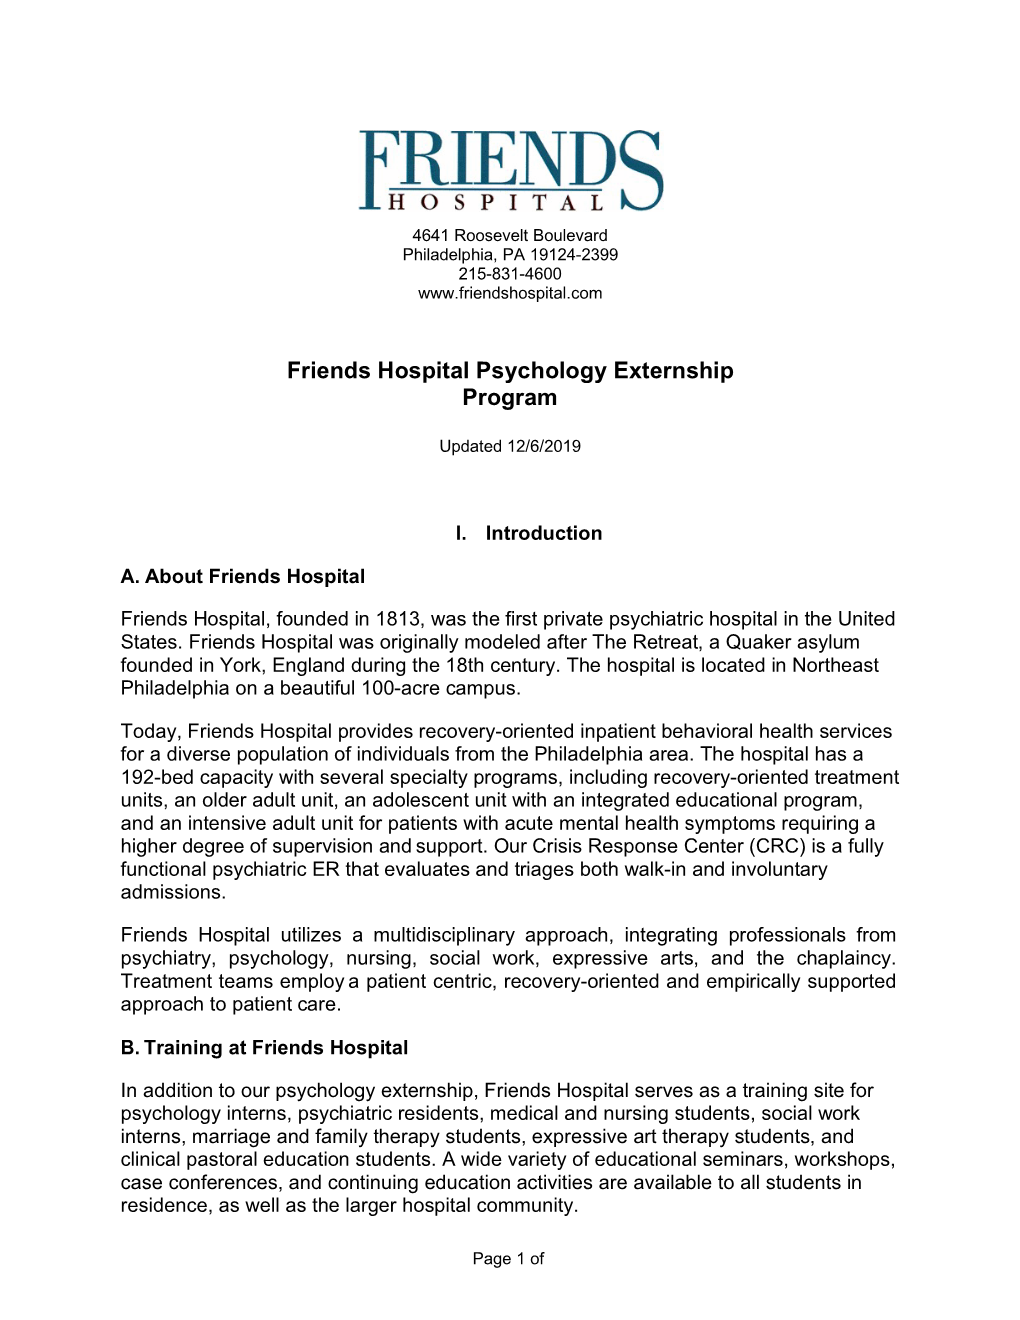 Friends Hospital Psychology Externship Program